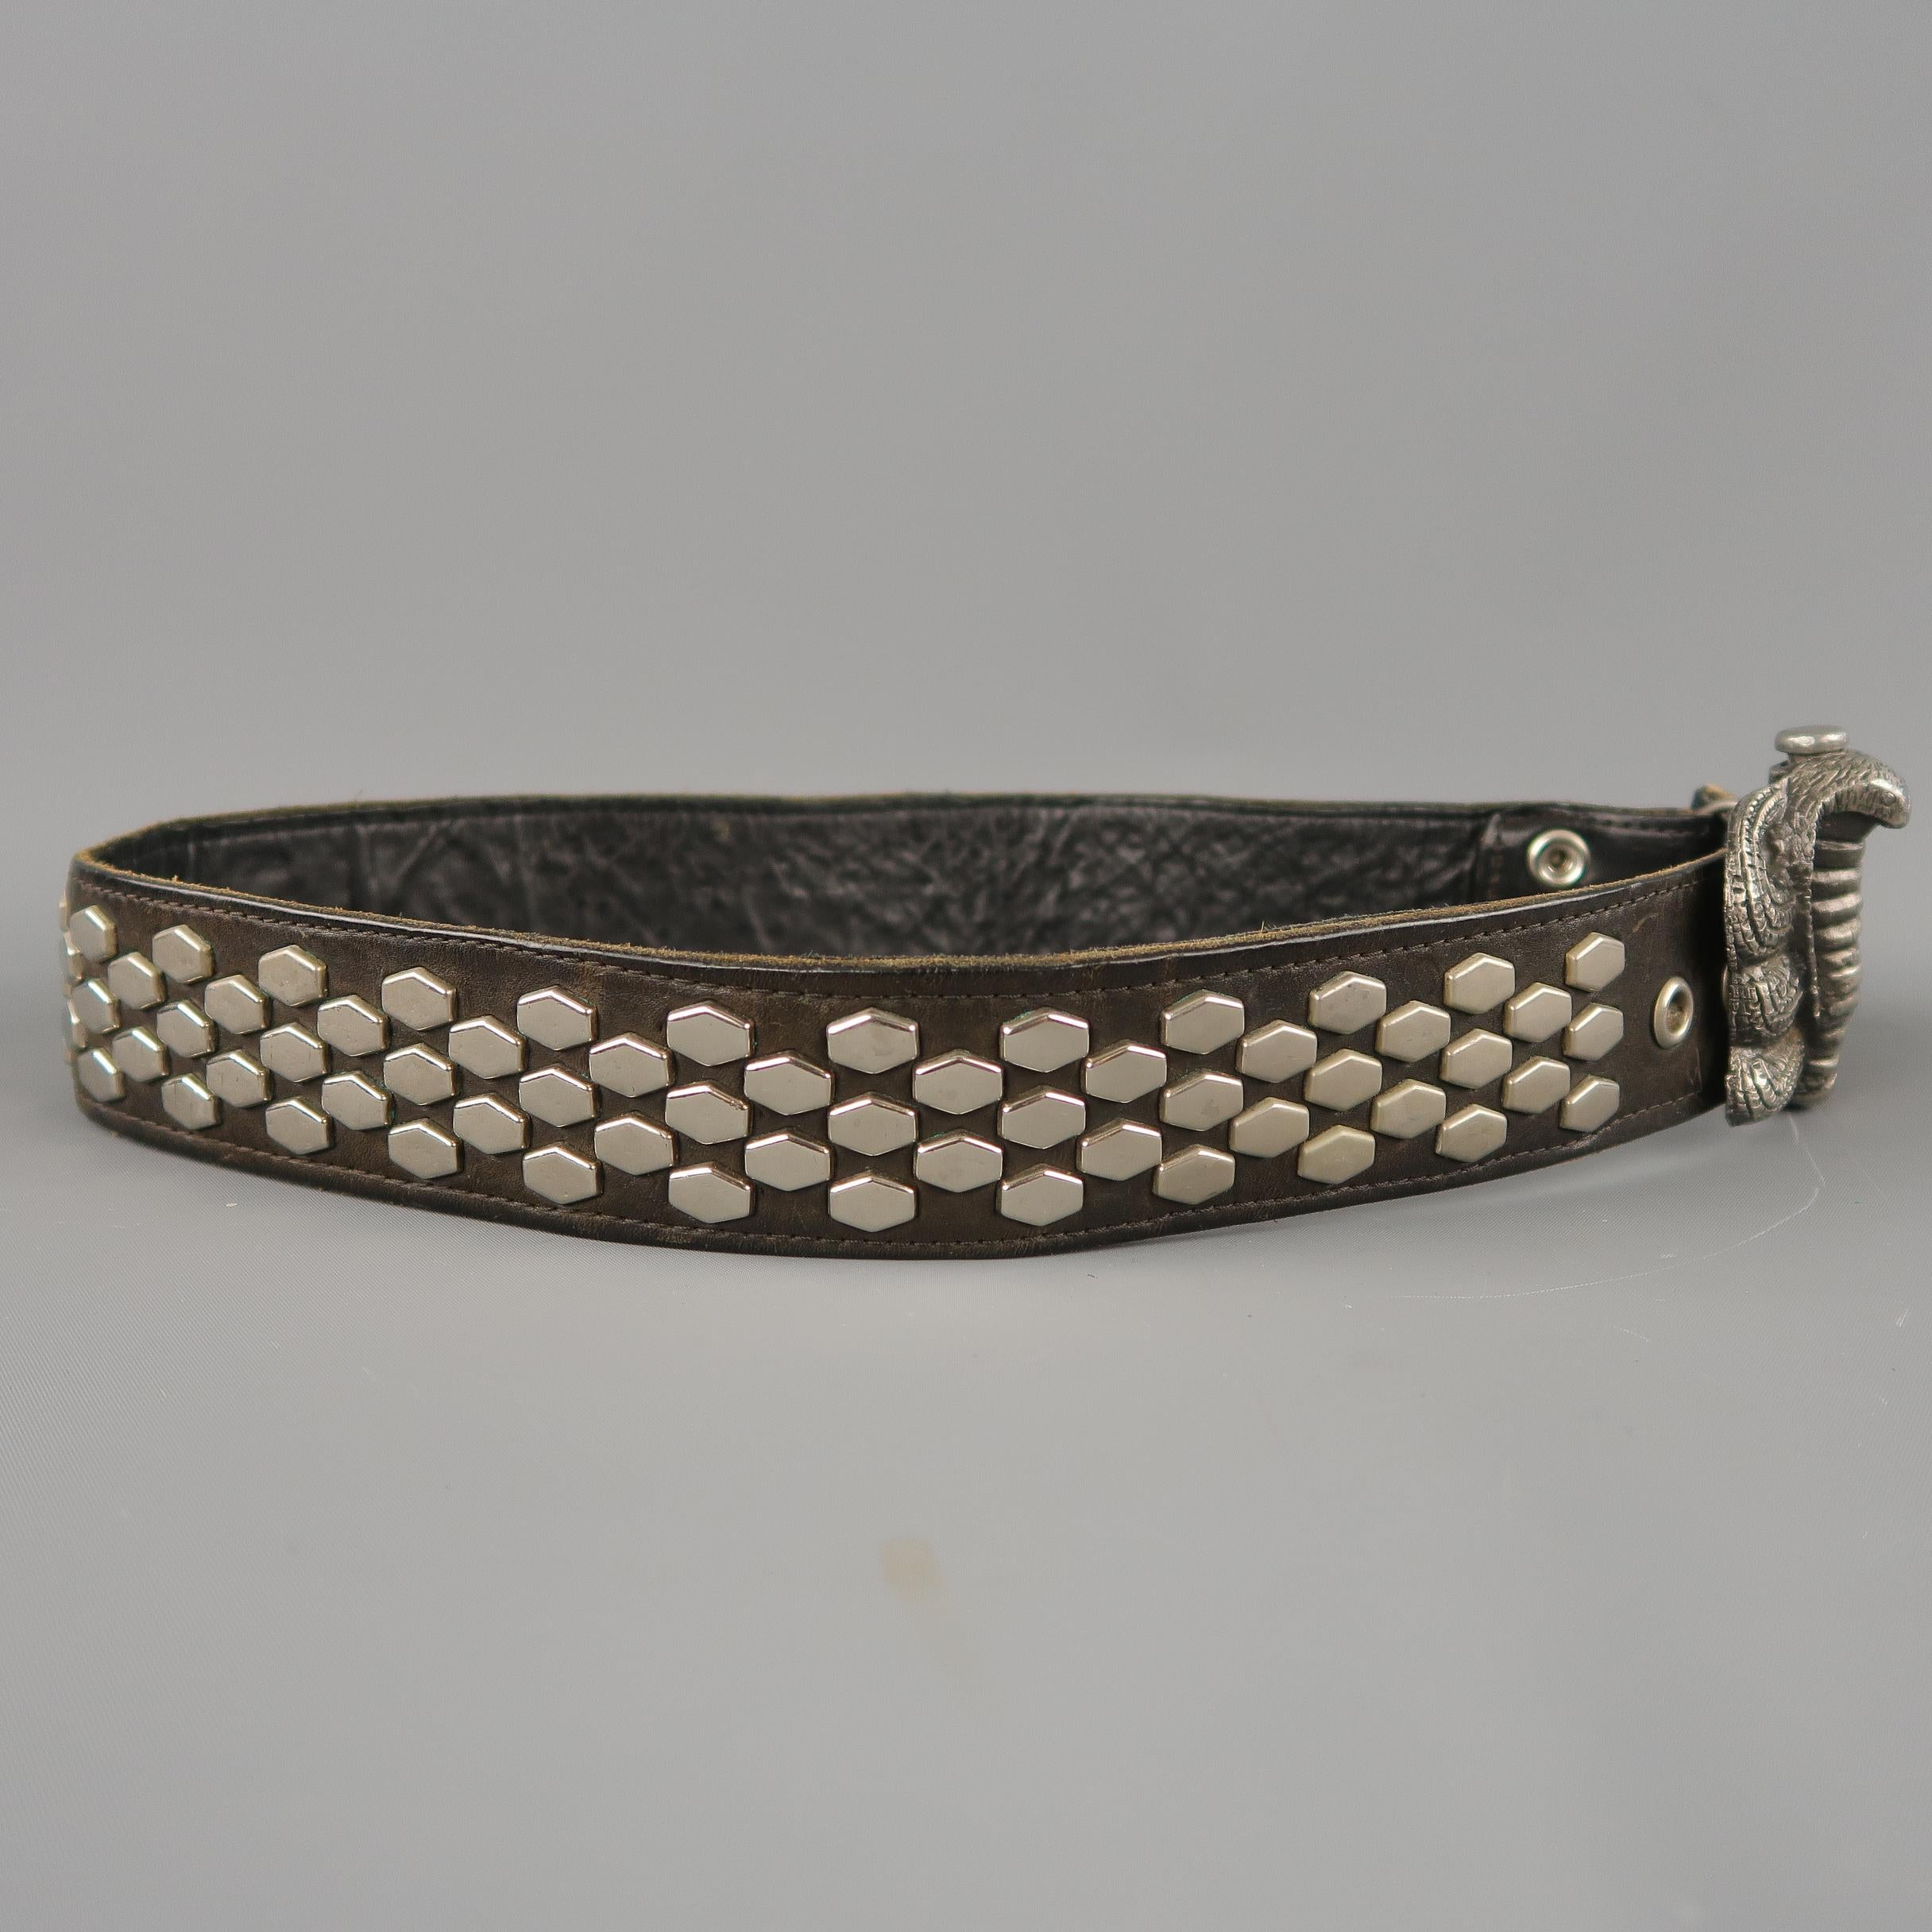 cobra buckle leather belt